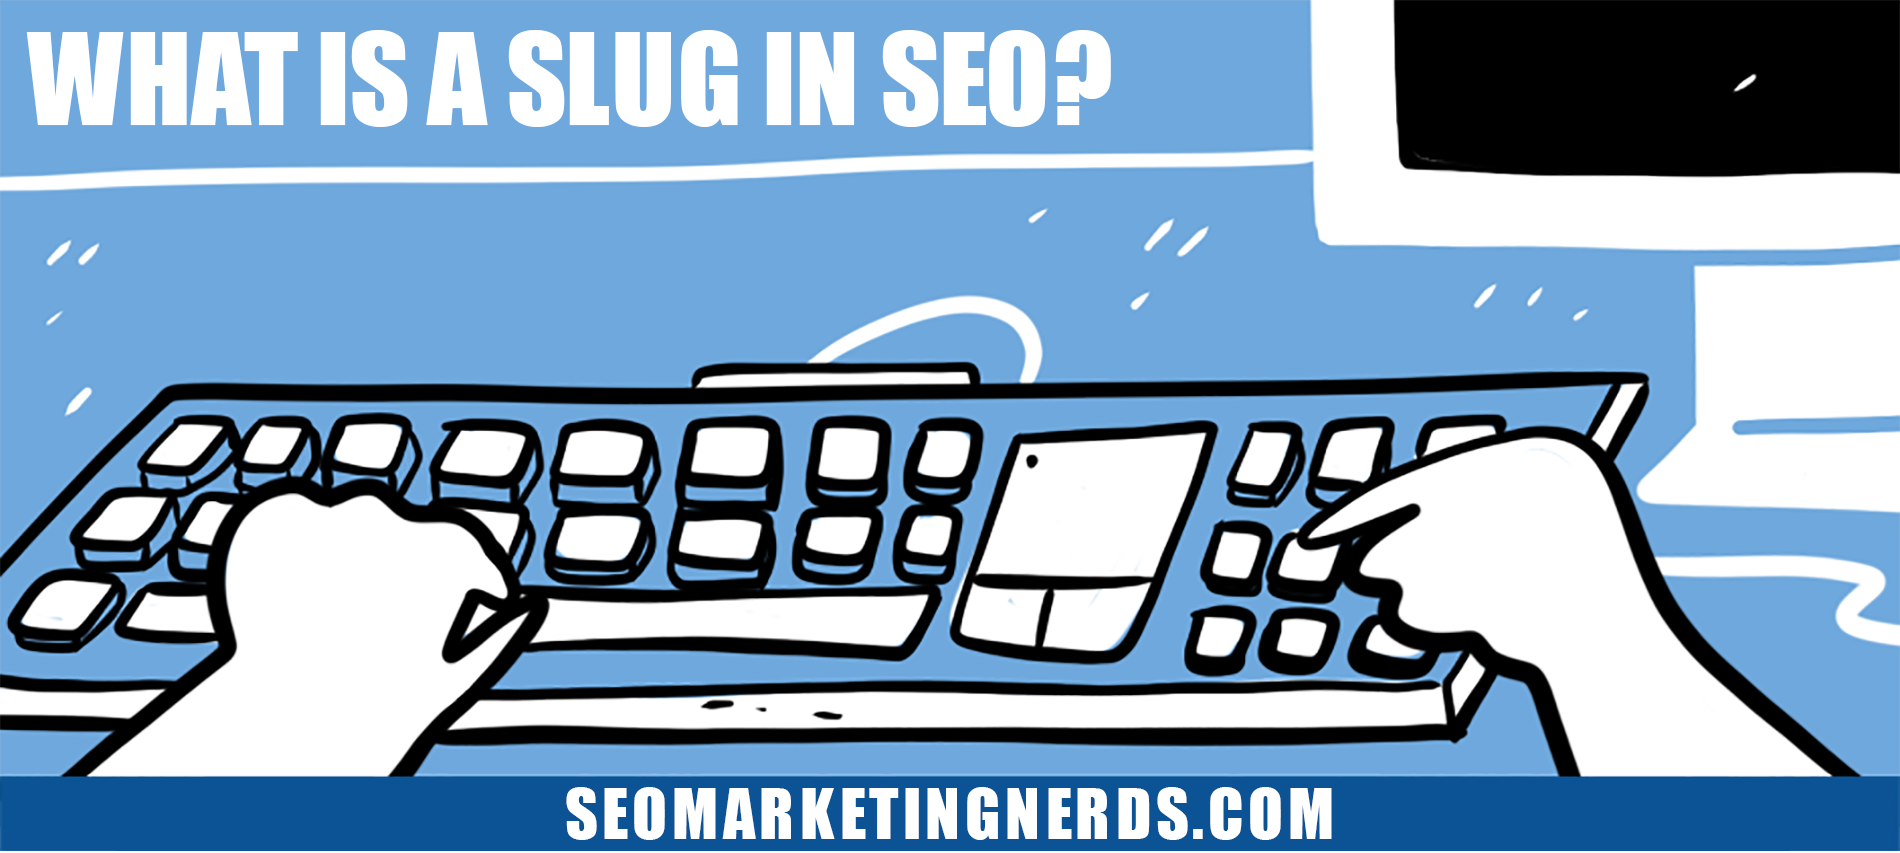 What is a slug in SEO?